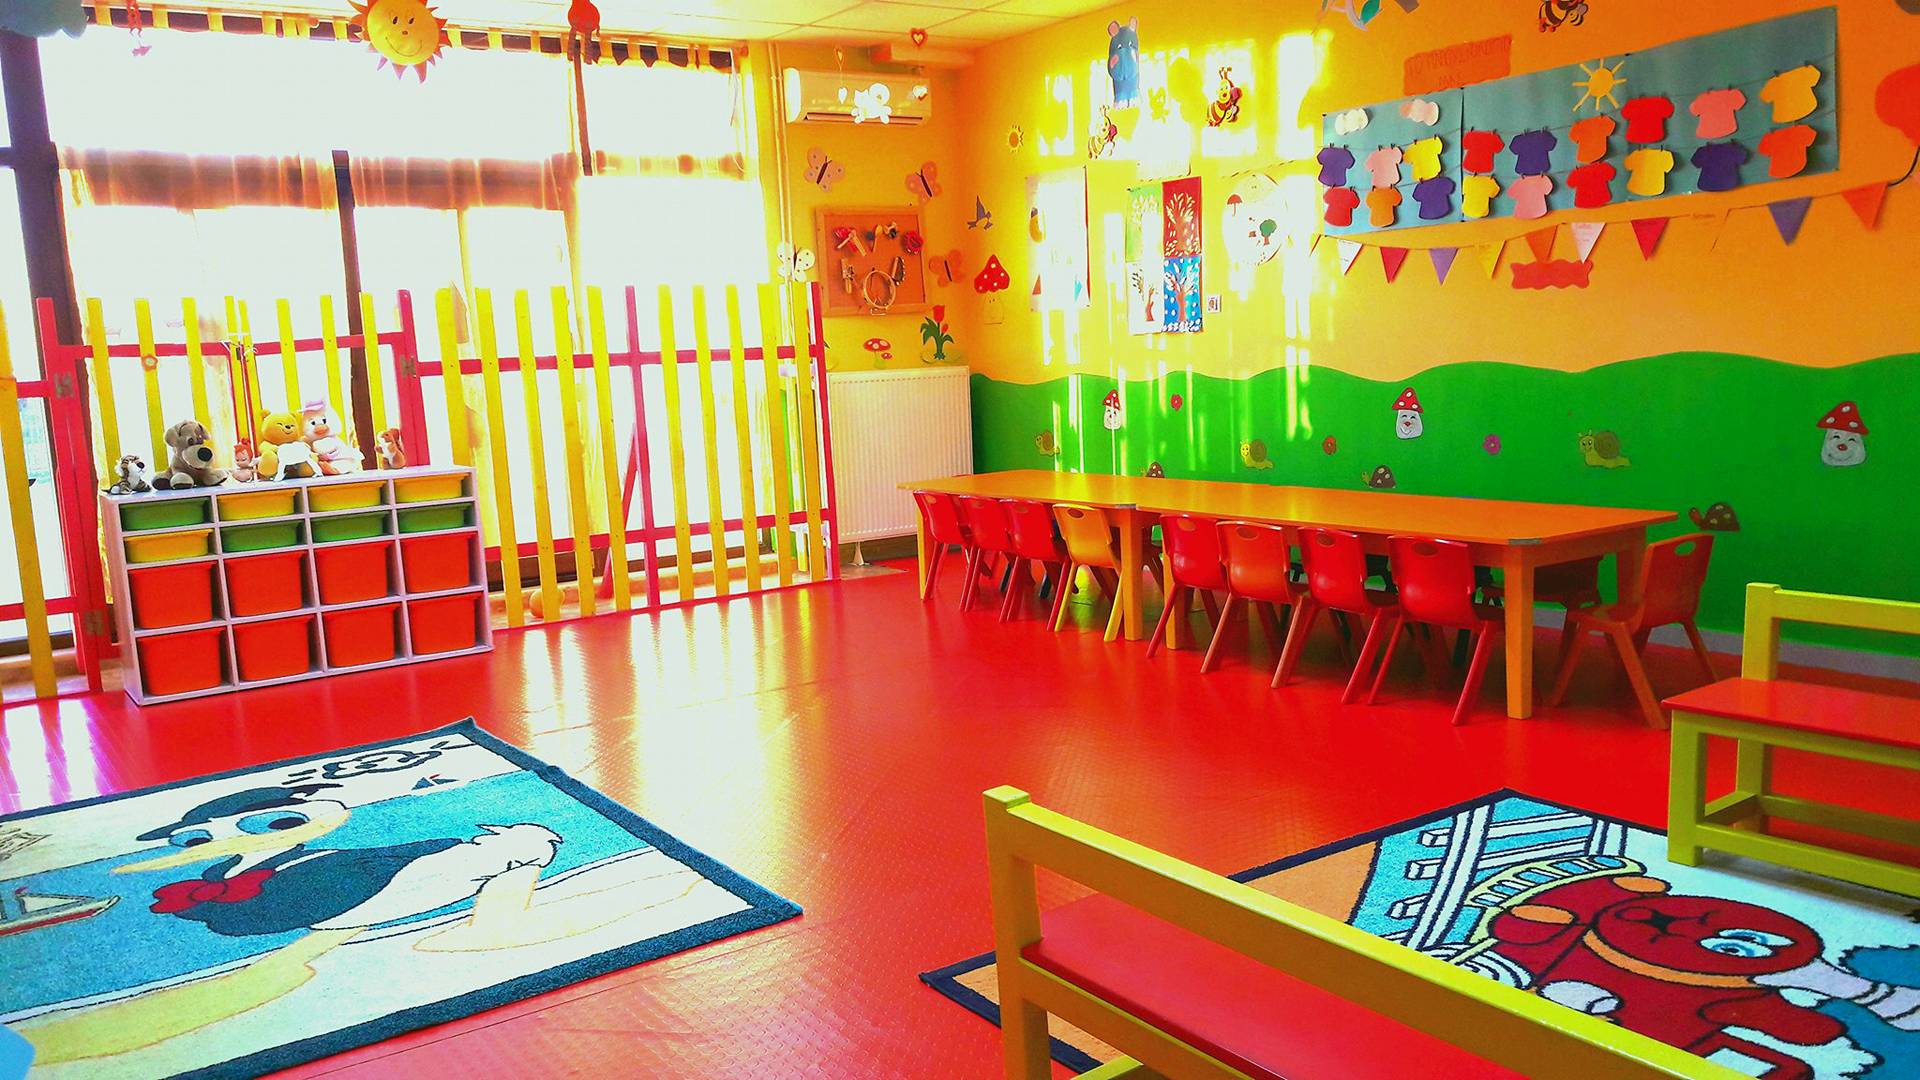 Tο πρόγραμμα αγιασμών των παιδικών σταθμών του Δήμου Λαρισαίων